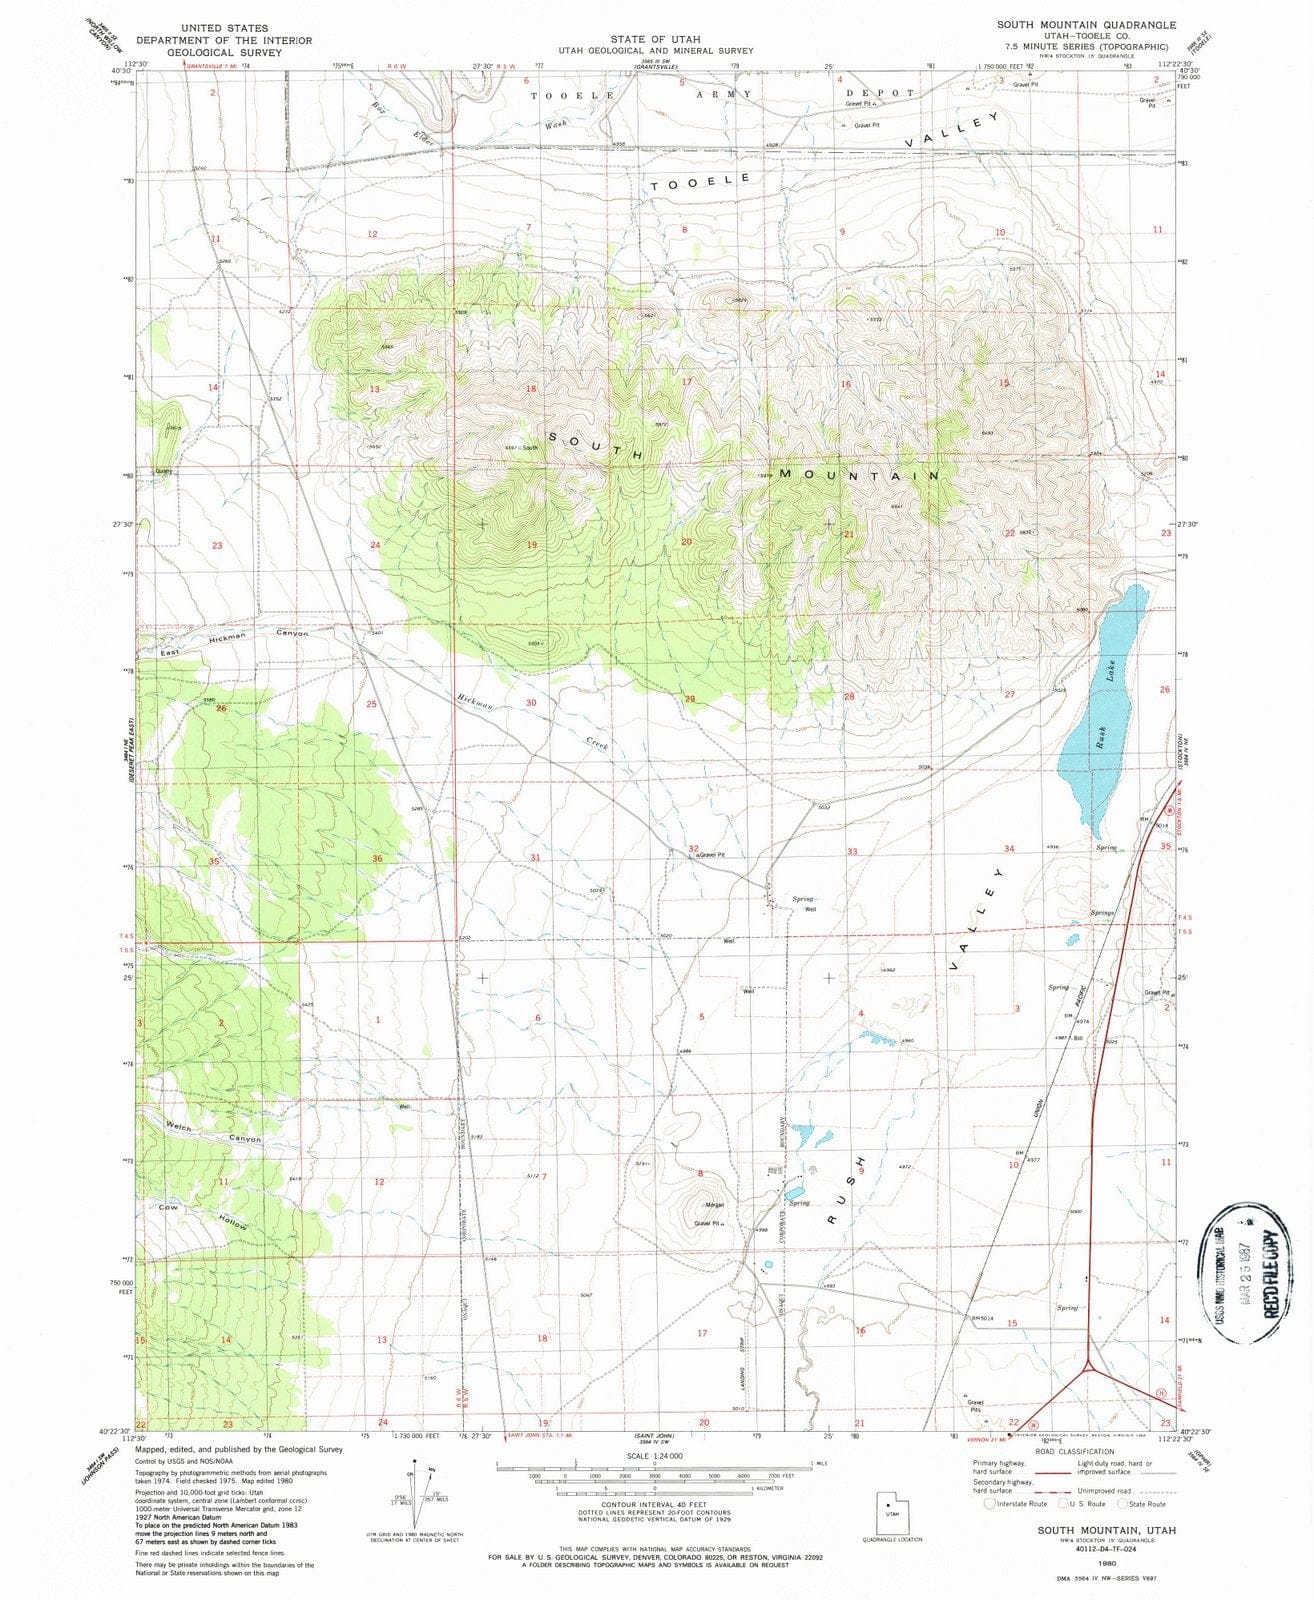 1980 South Mountain, UT - Utah - USGS Topographic Map